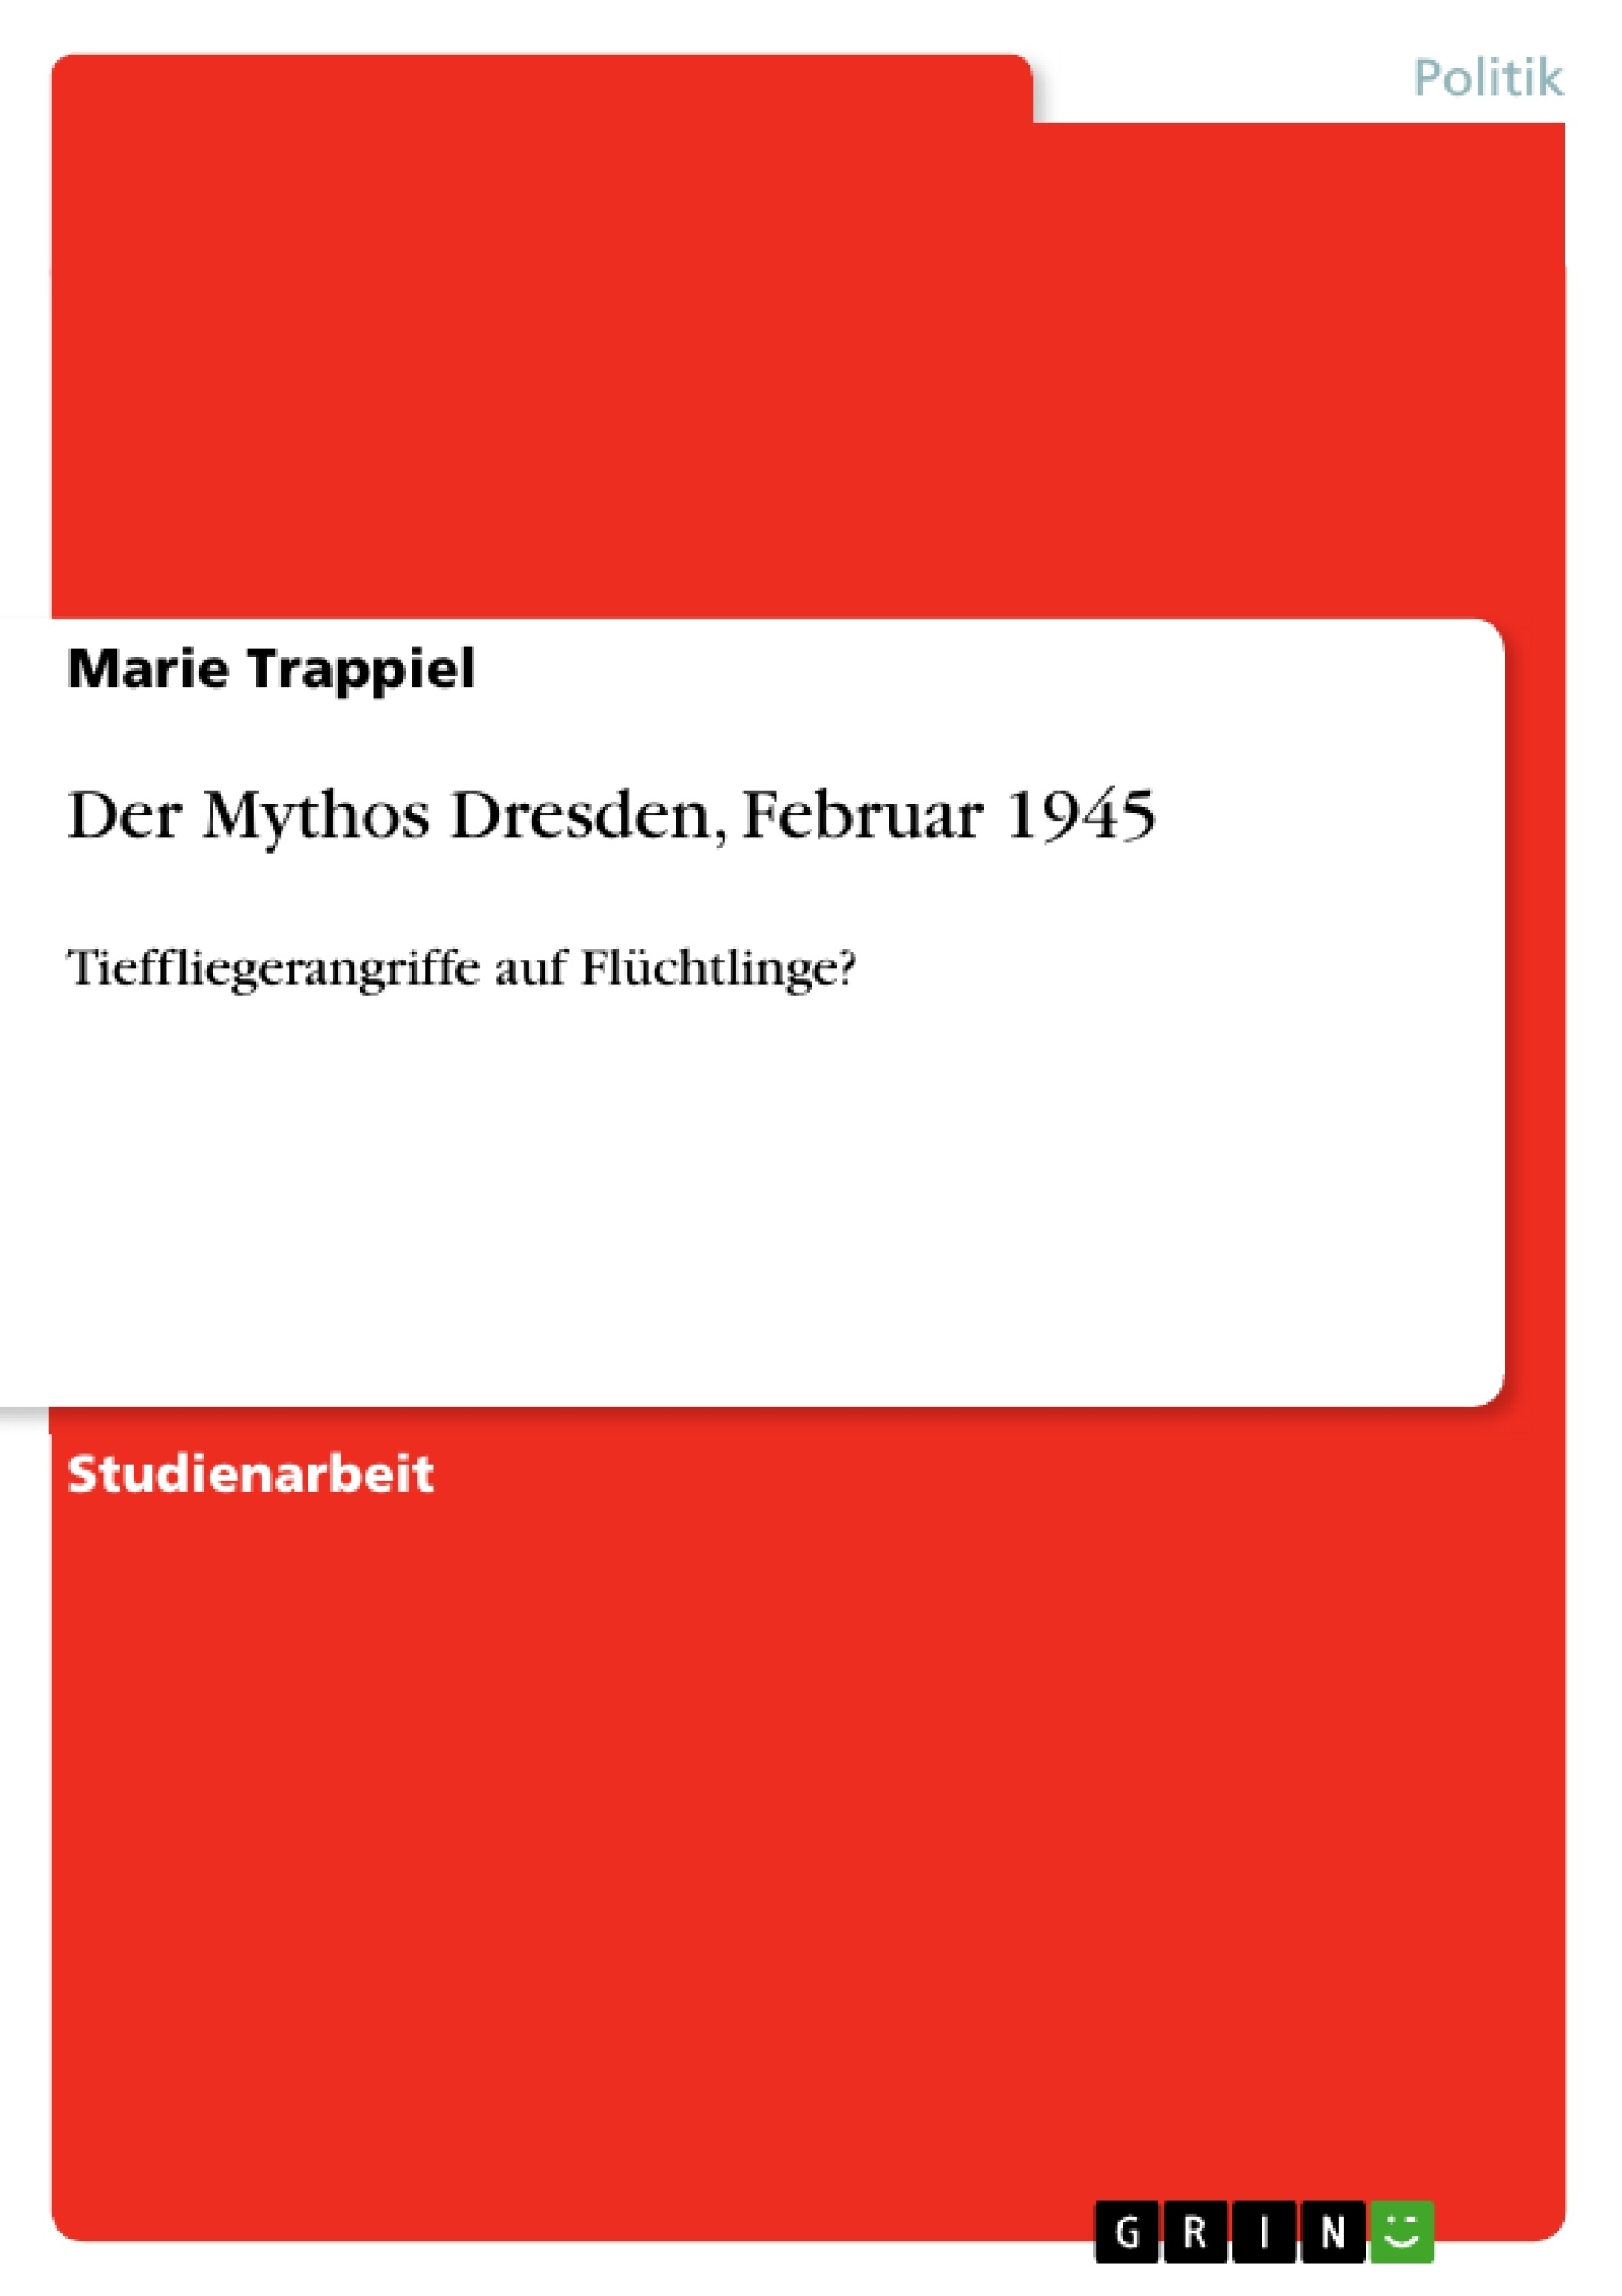 Título: Der Mythos Dresden, Februar 1945